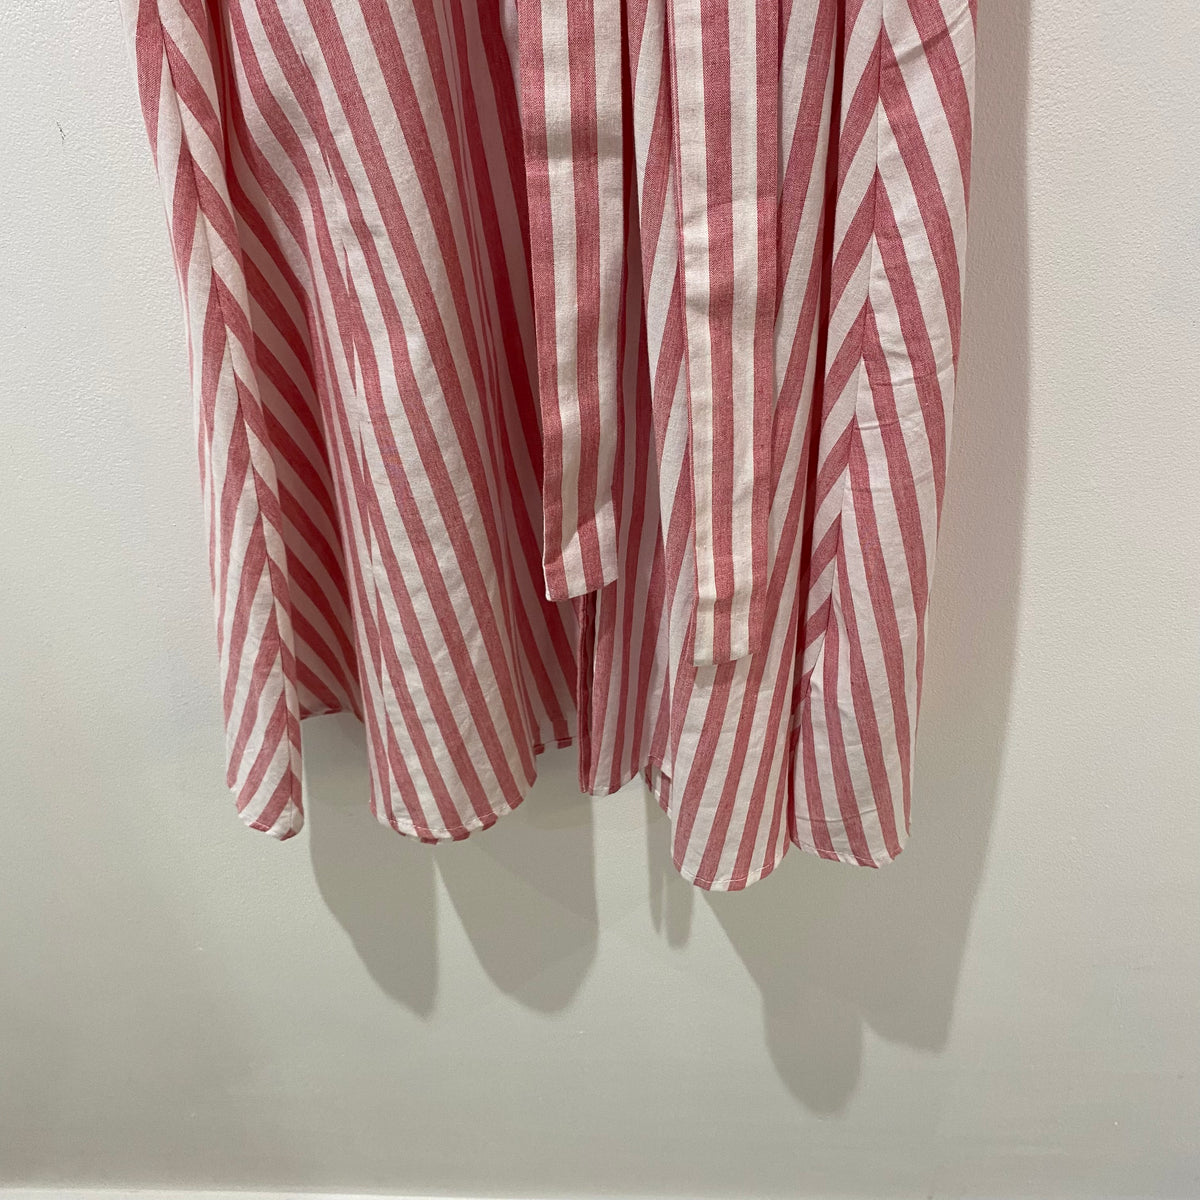 Sugarhill stripe dress Pink/White Size 8